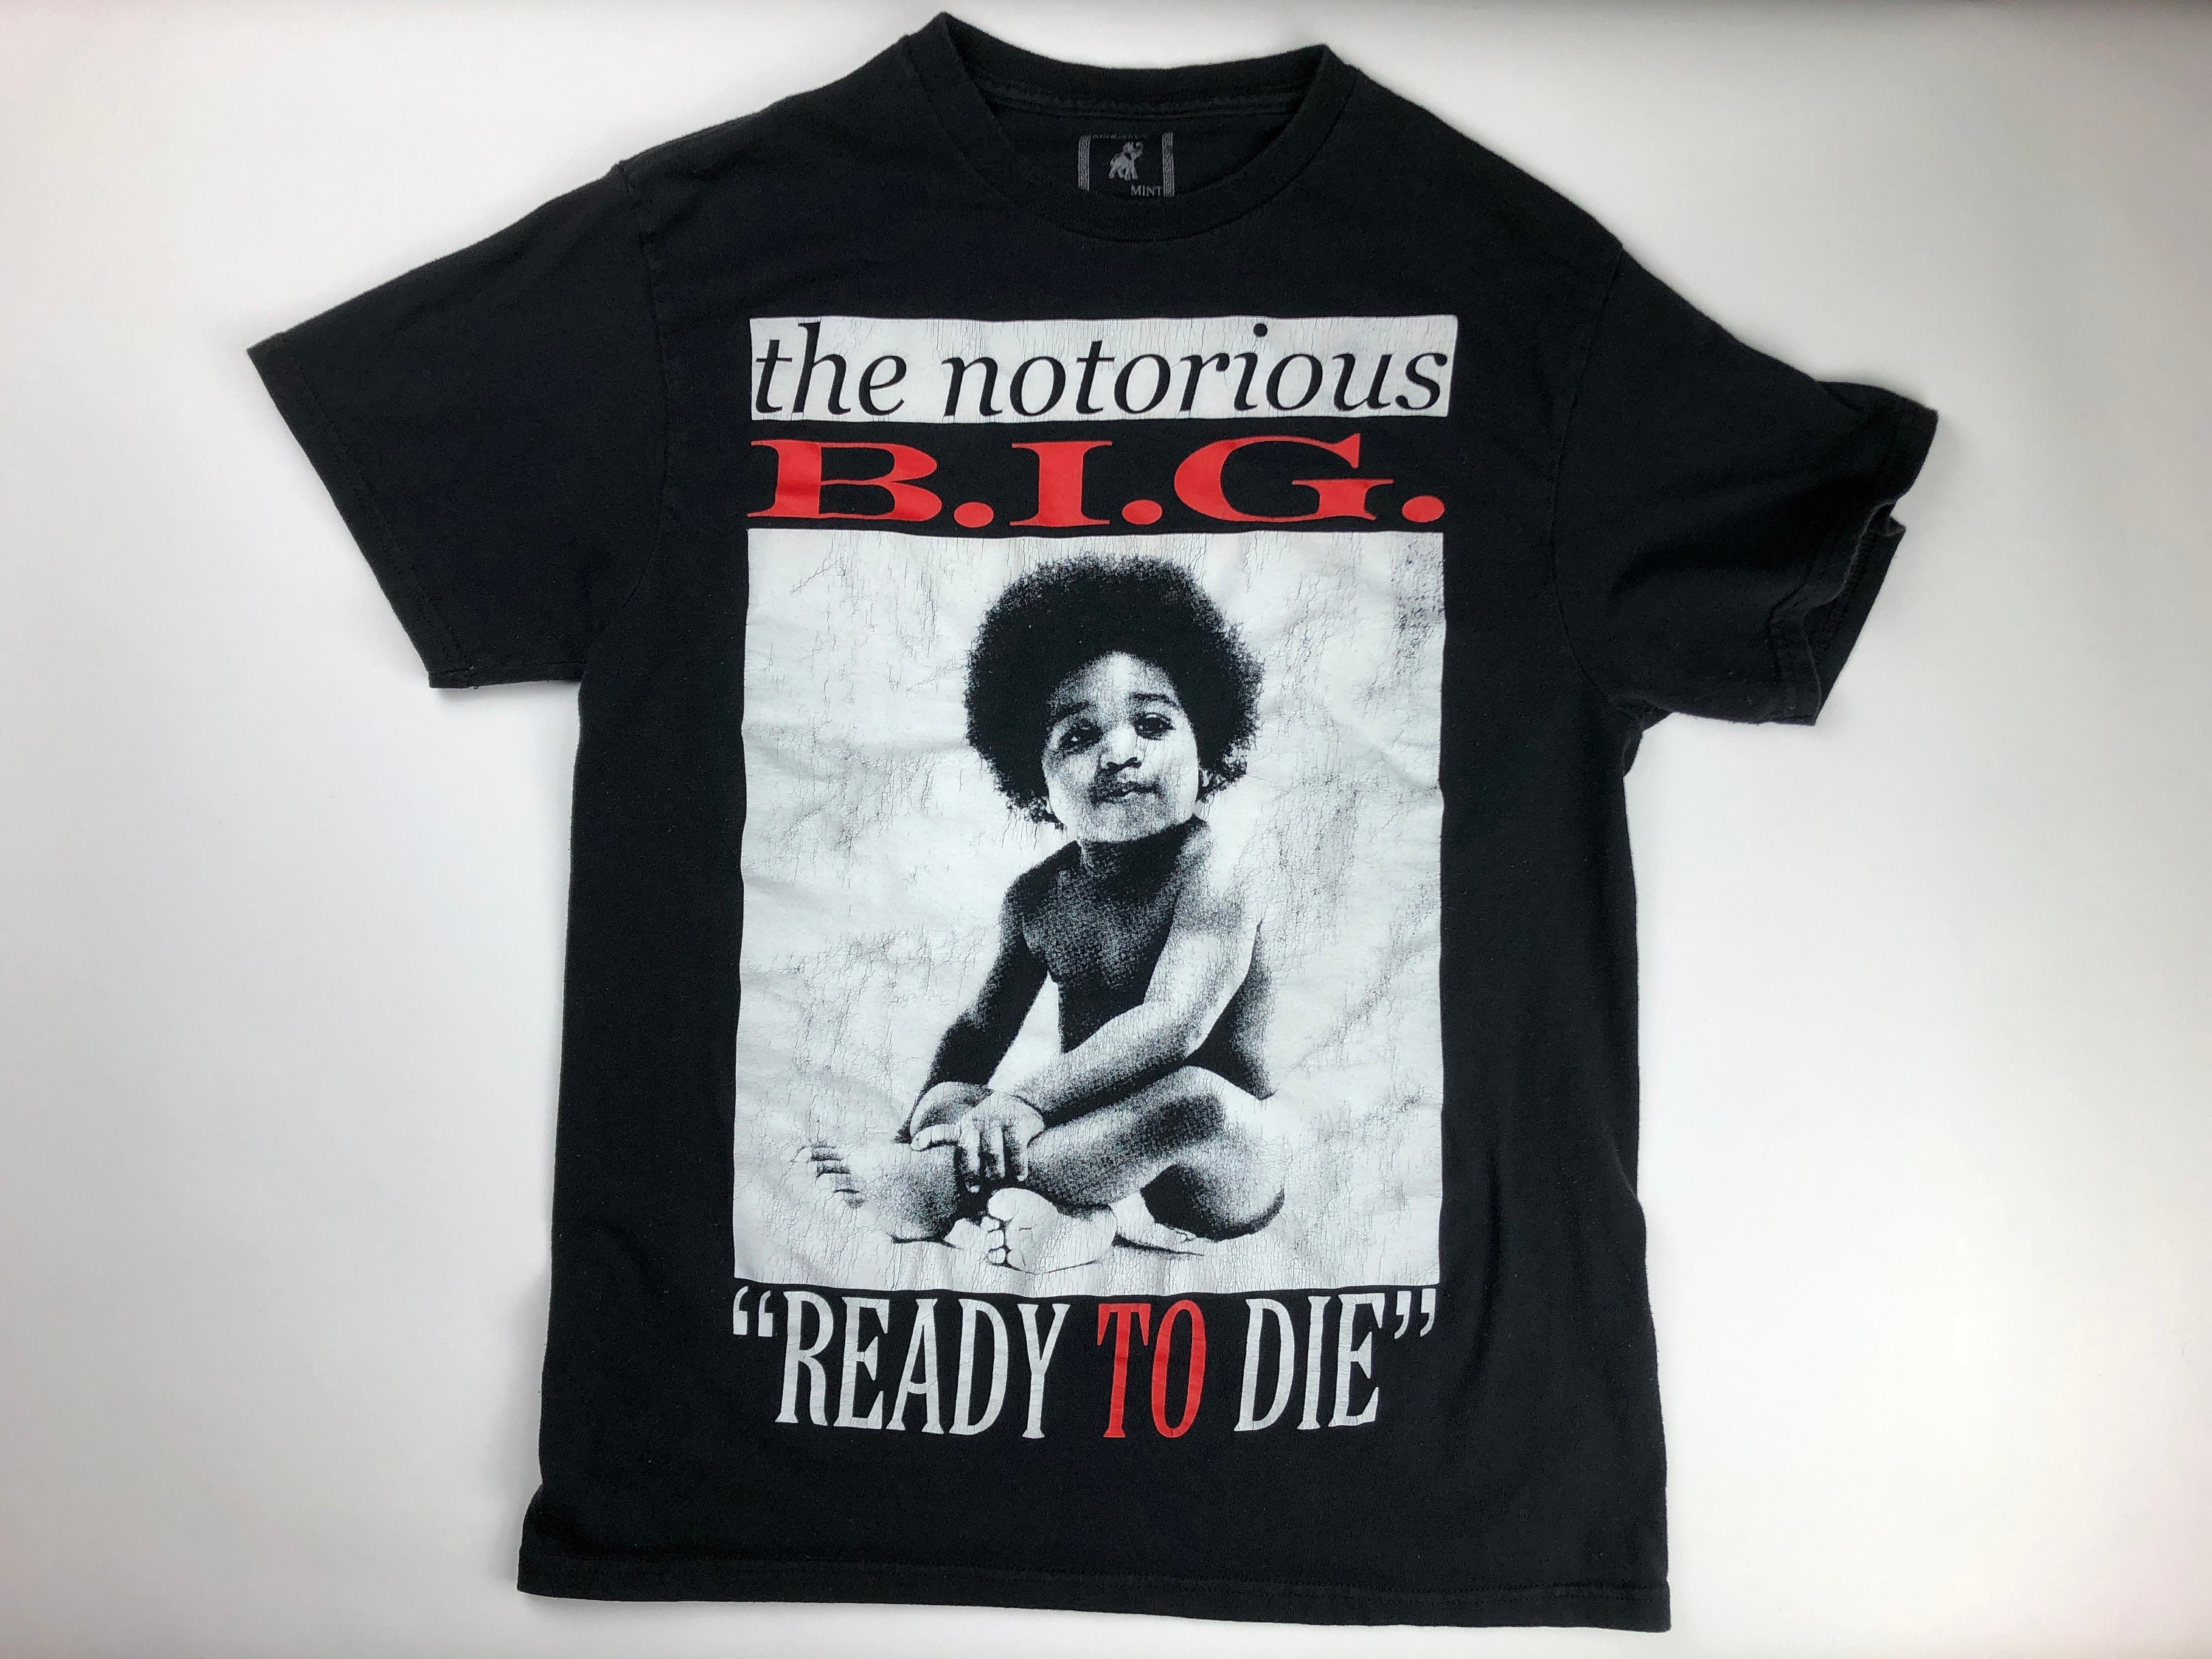 100% hip hop: Notorious B.I.G.